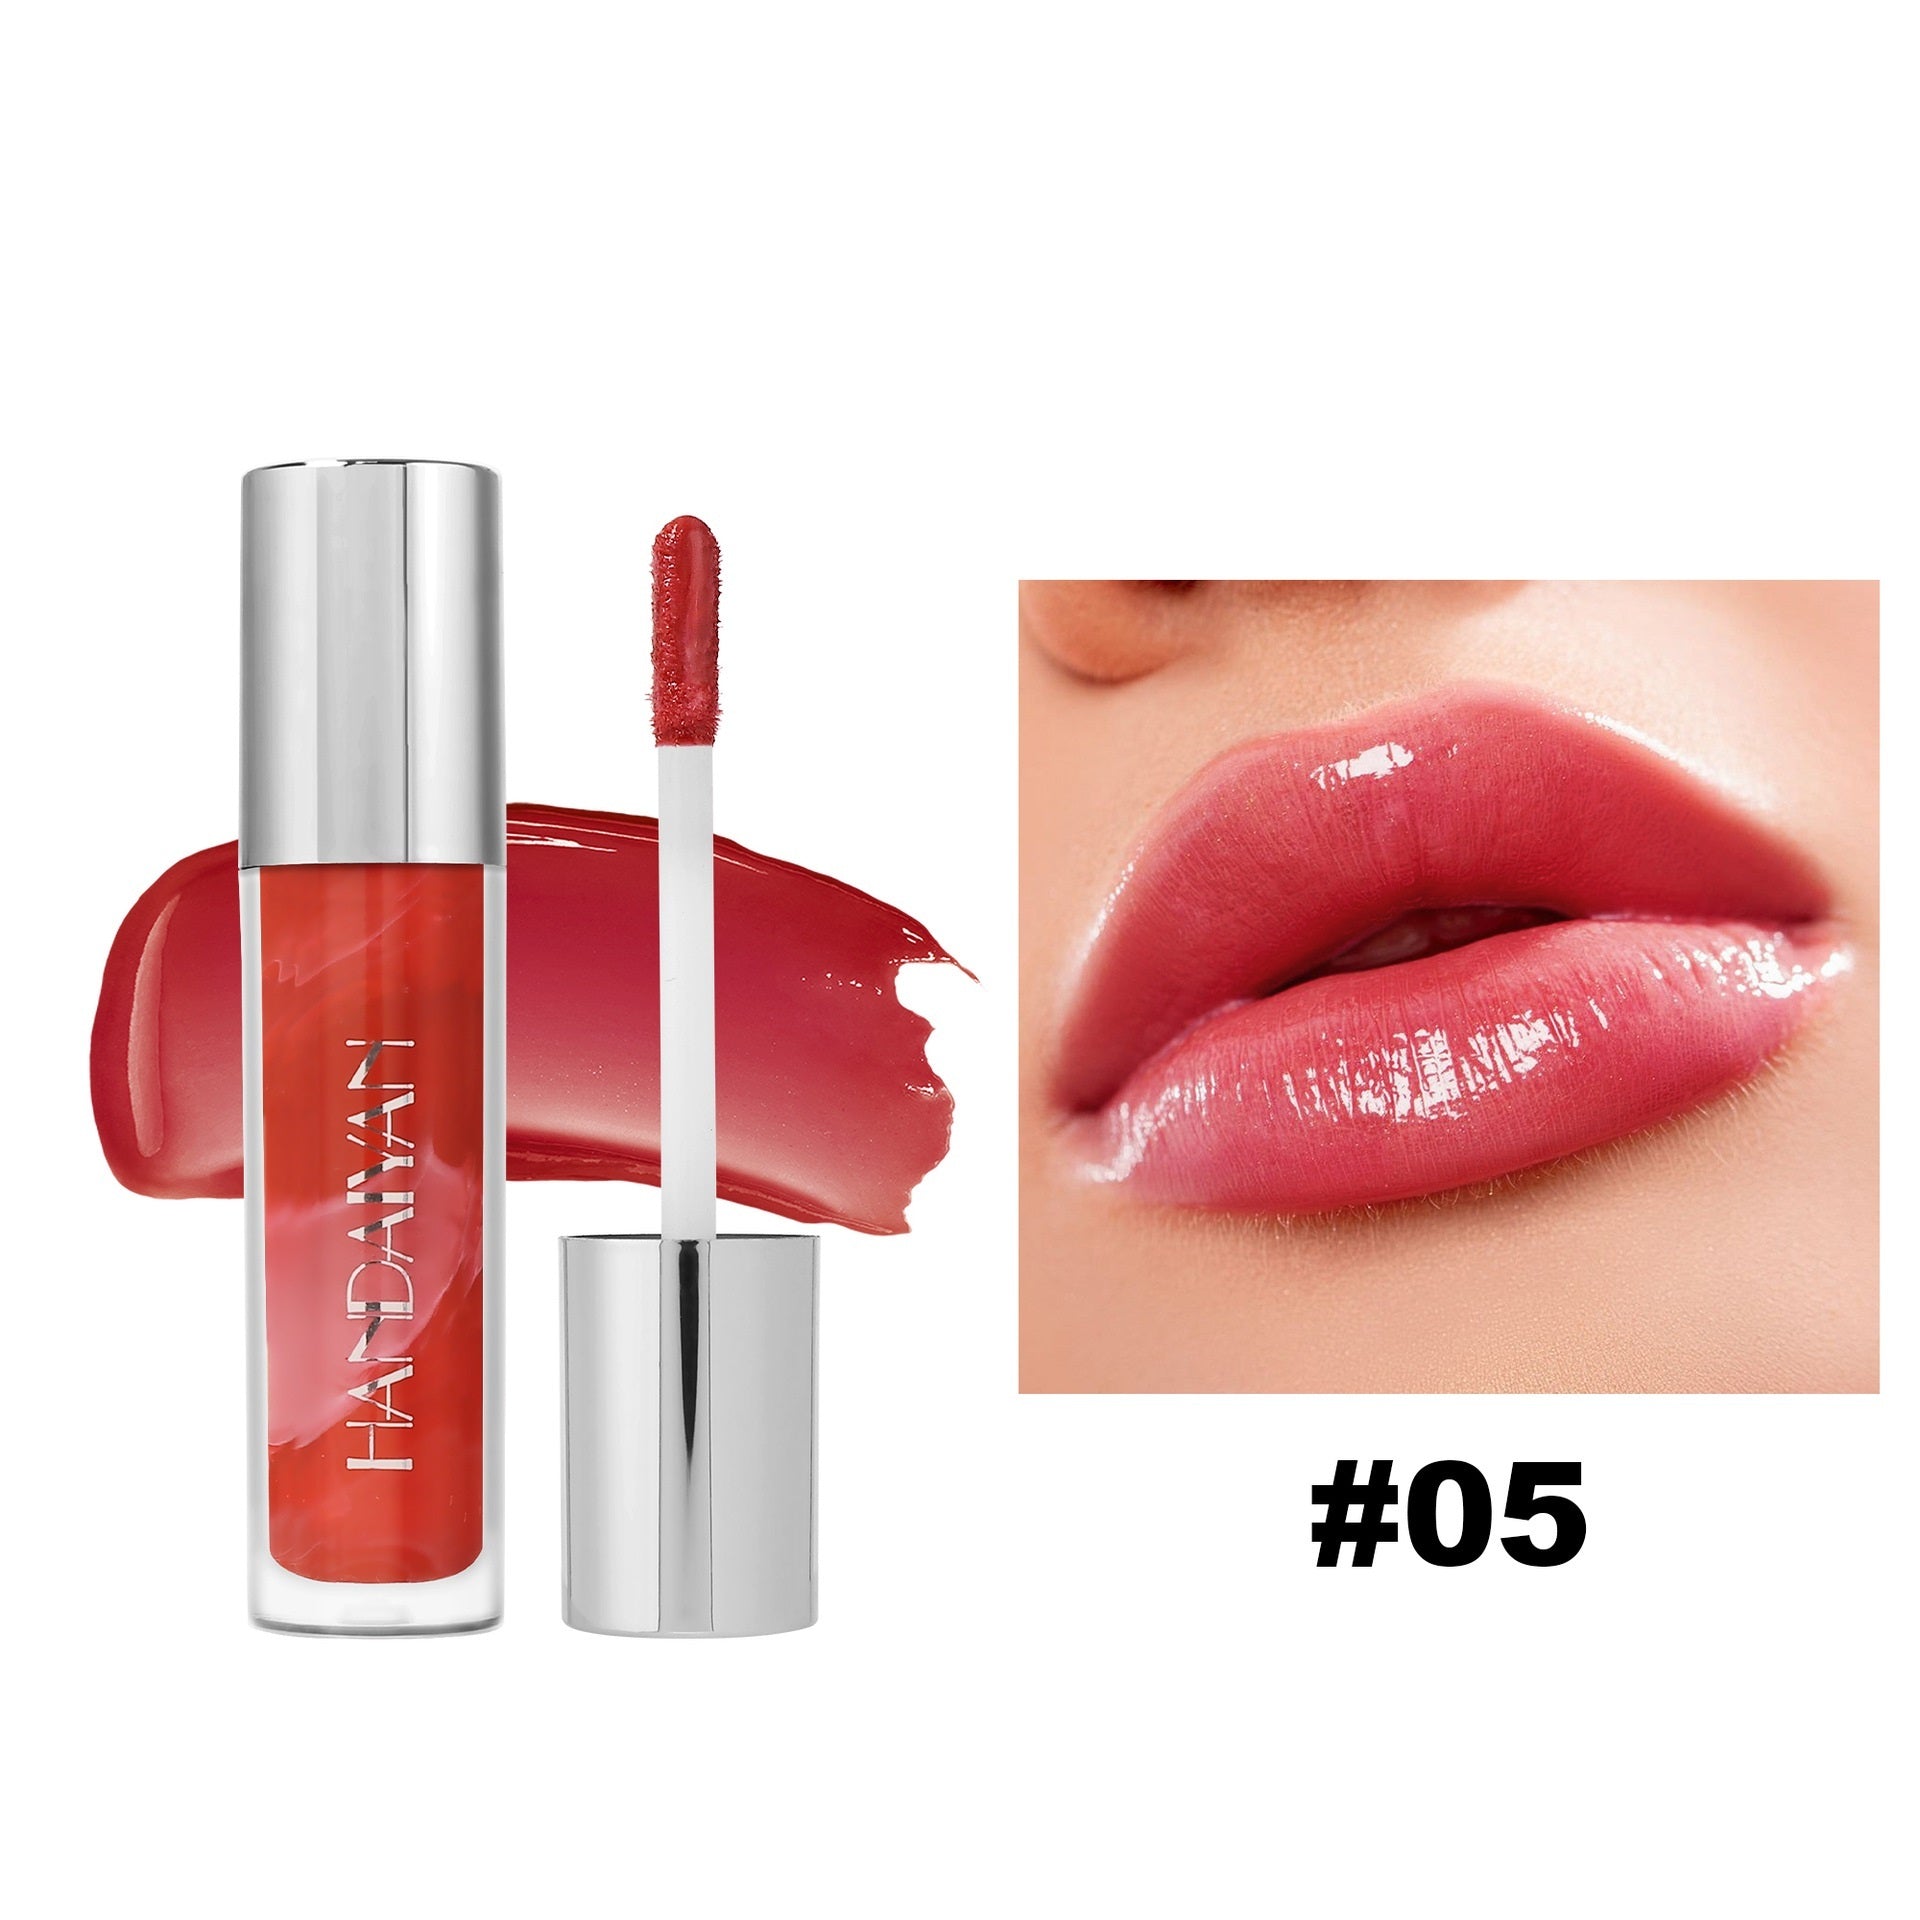 6 Colors Marbling Lip Gloss Liquid Lipstick